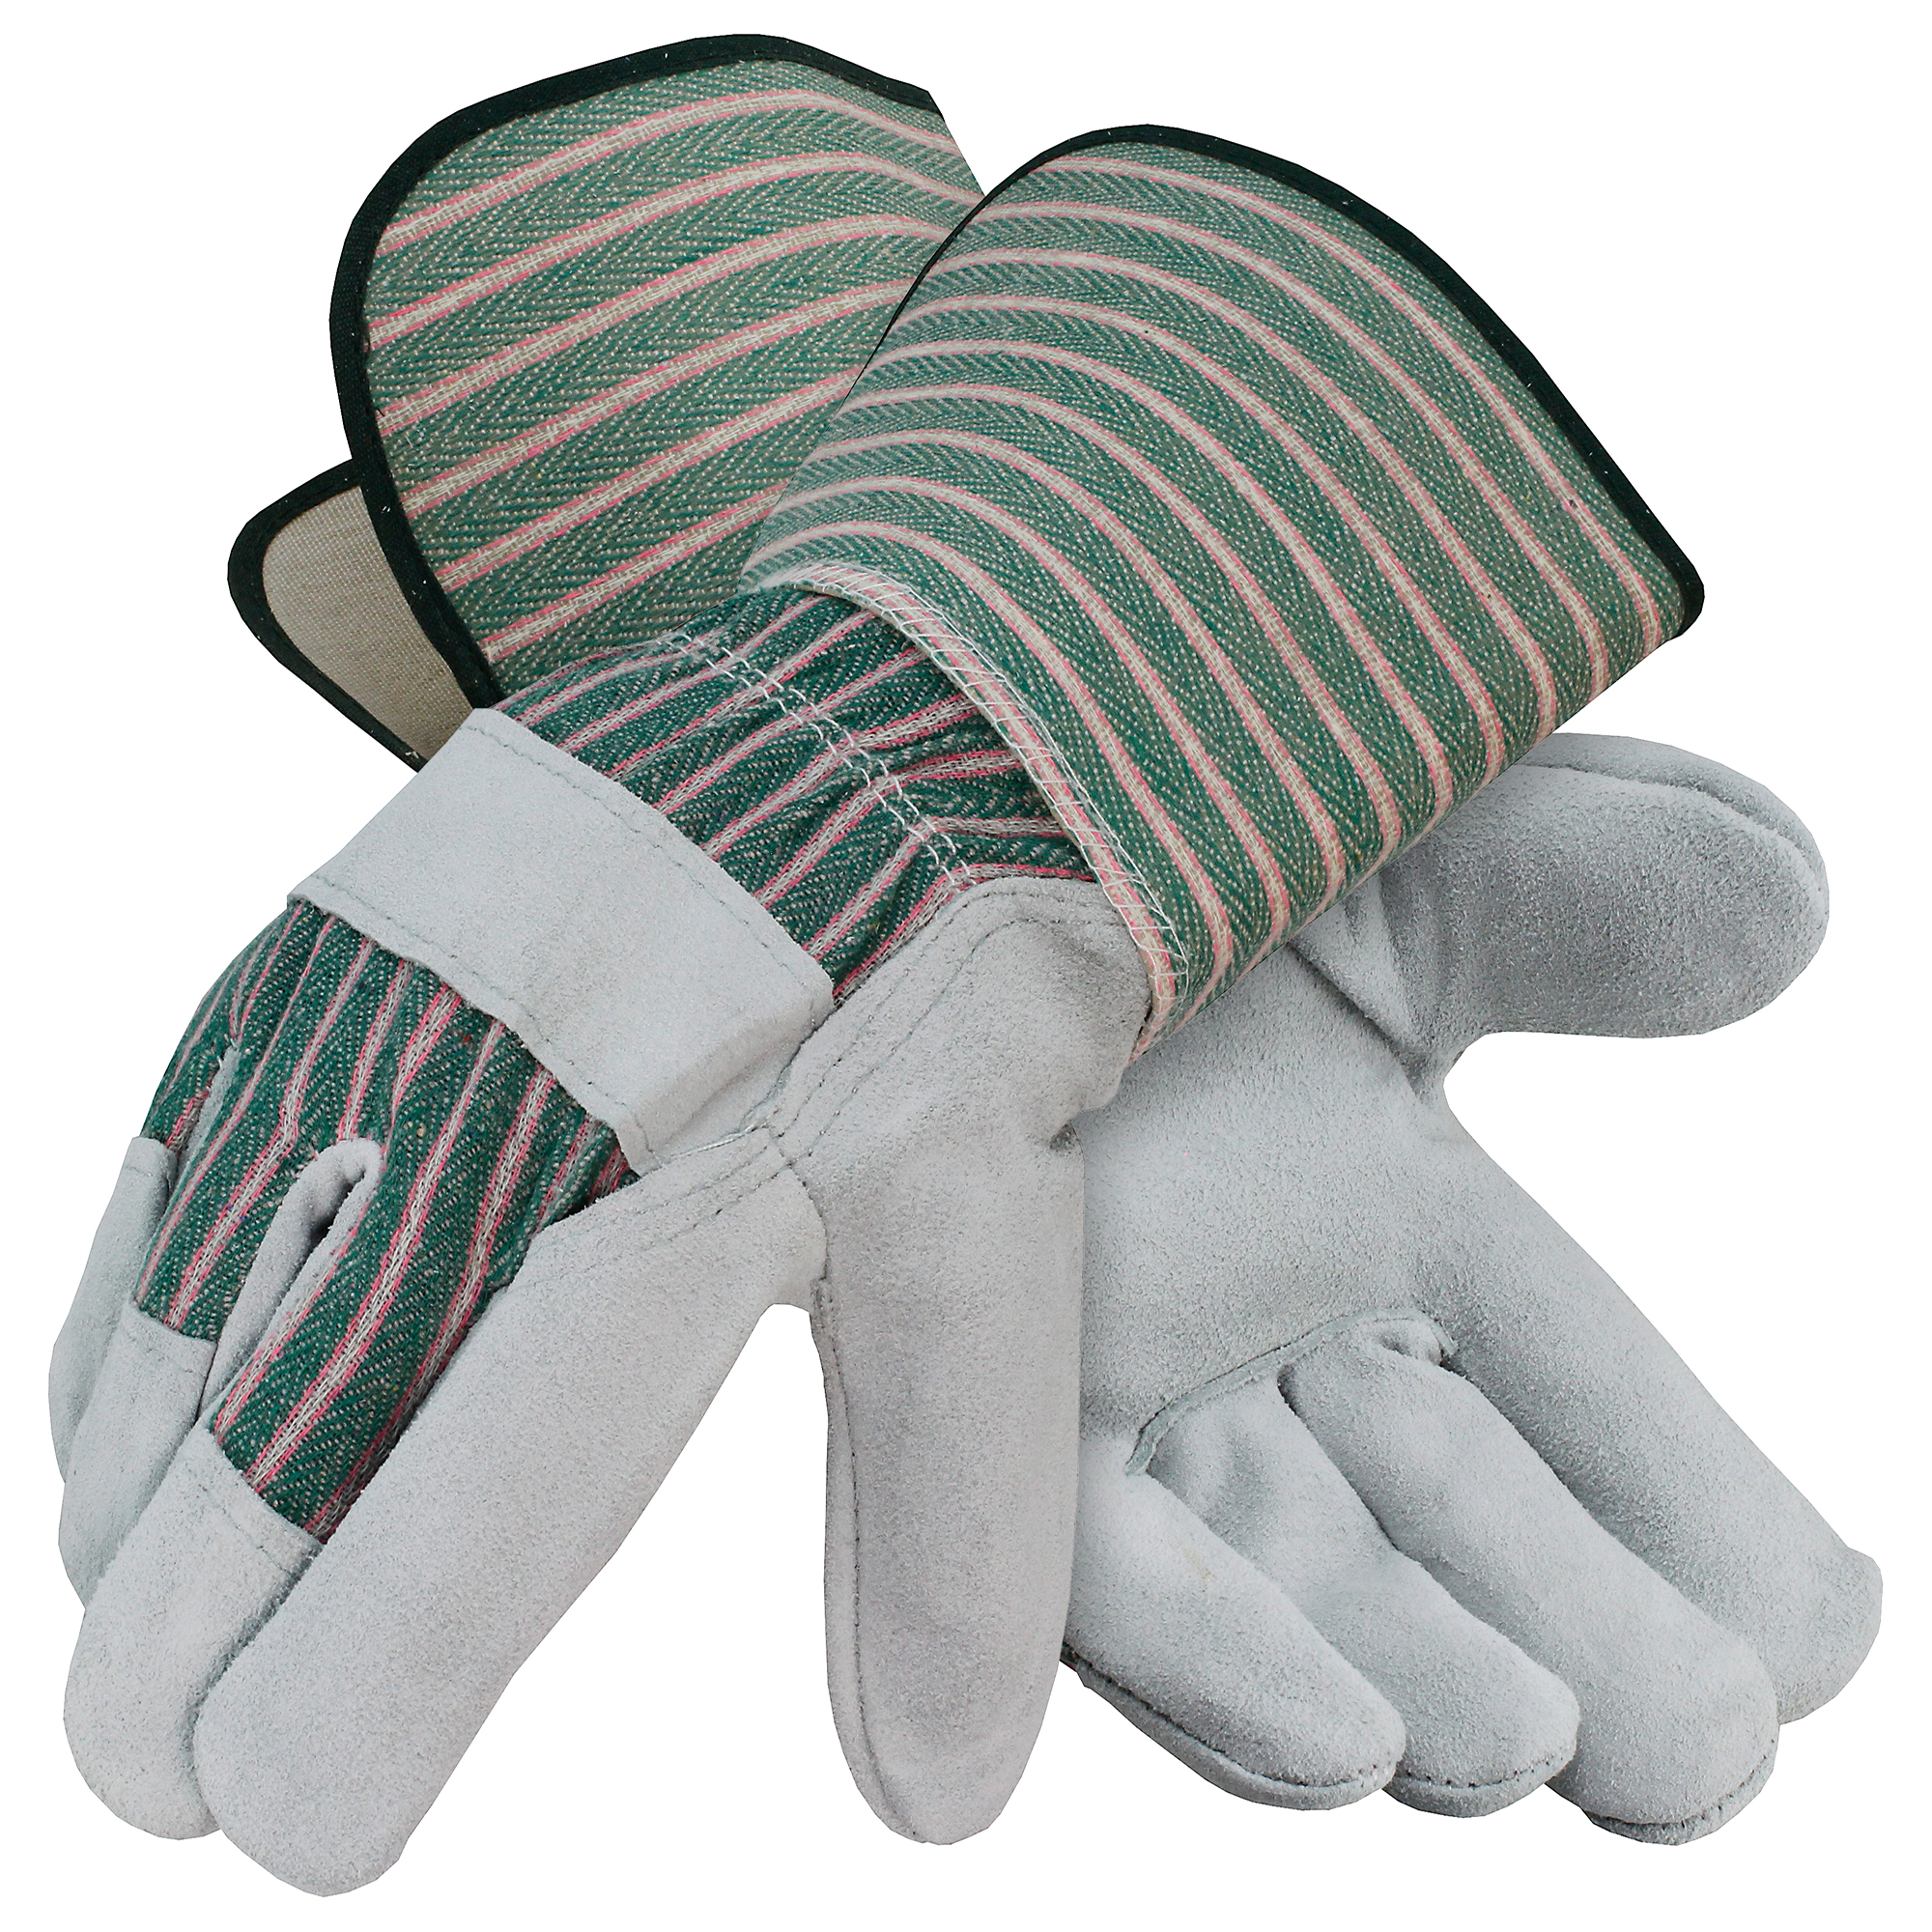 Leather Palm Gloves, Gauntlet Cuff, 1 Pair